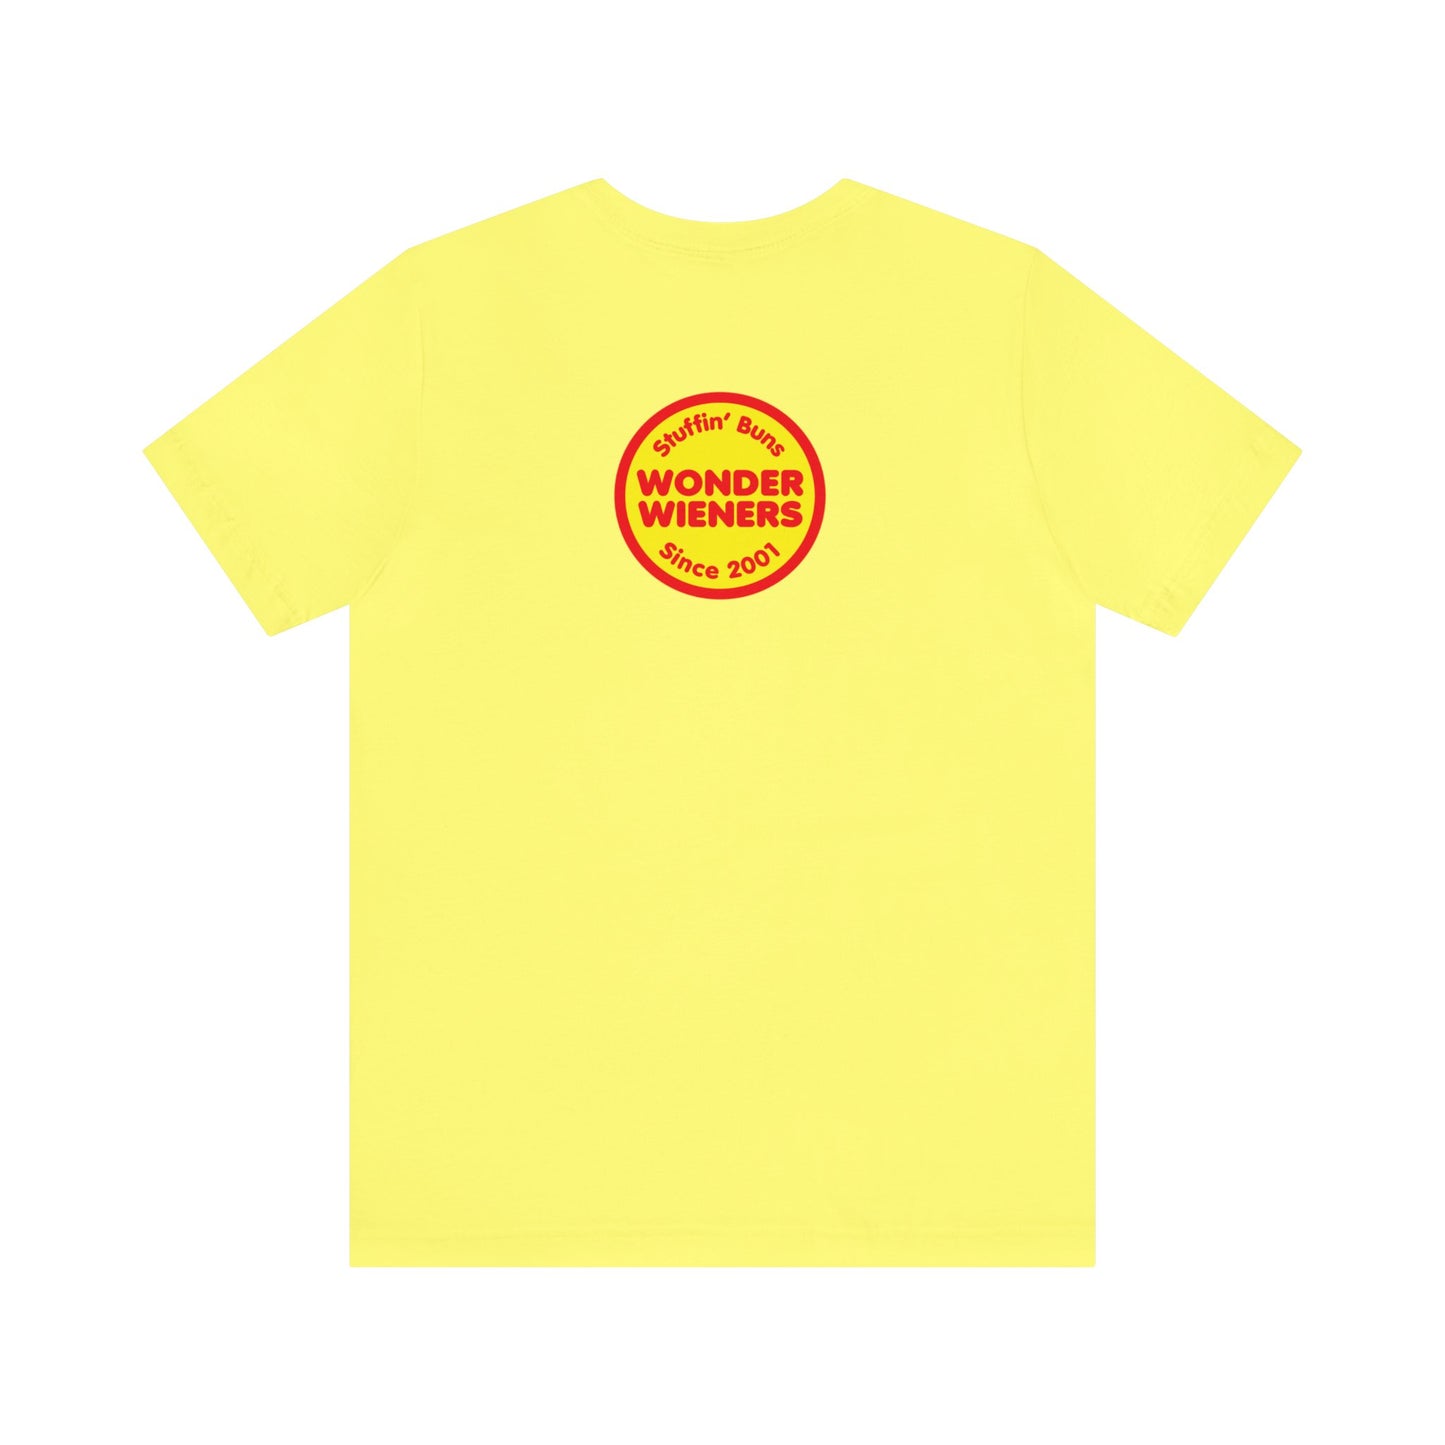 Wonder Wieners Logo Front, 'Stuffin Buns Since 2001' Back Tshirt